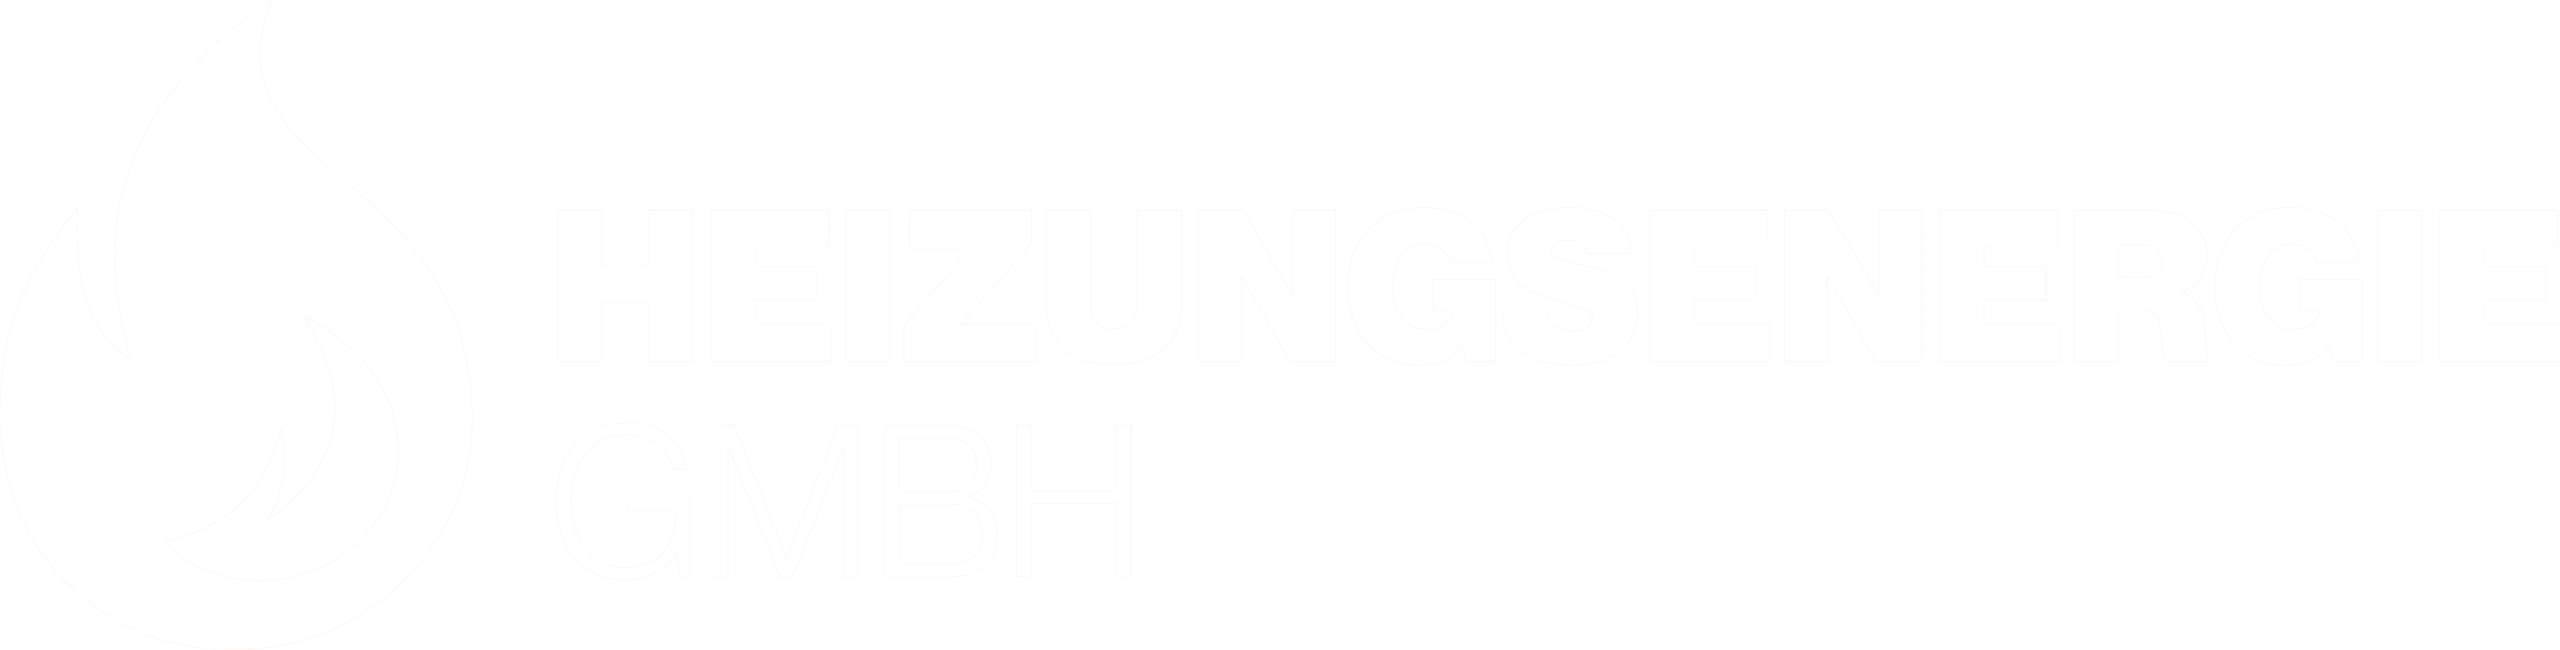 Heizungsenergie GmbH Logo